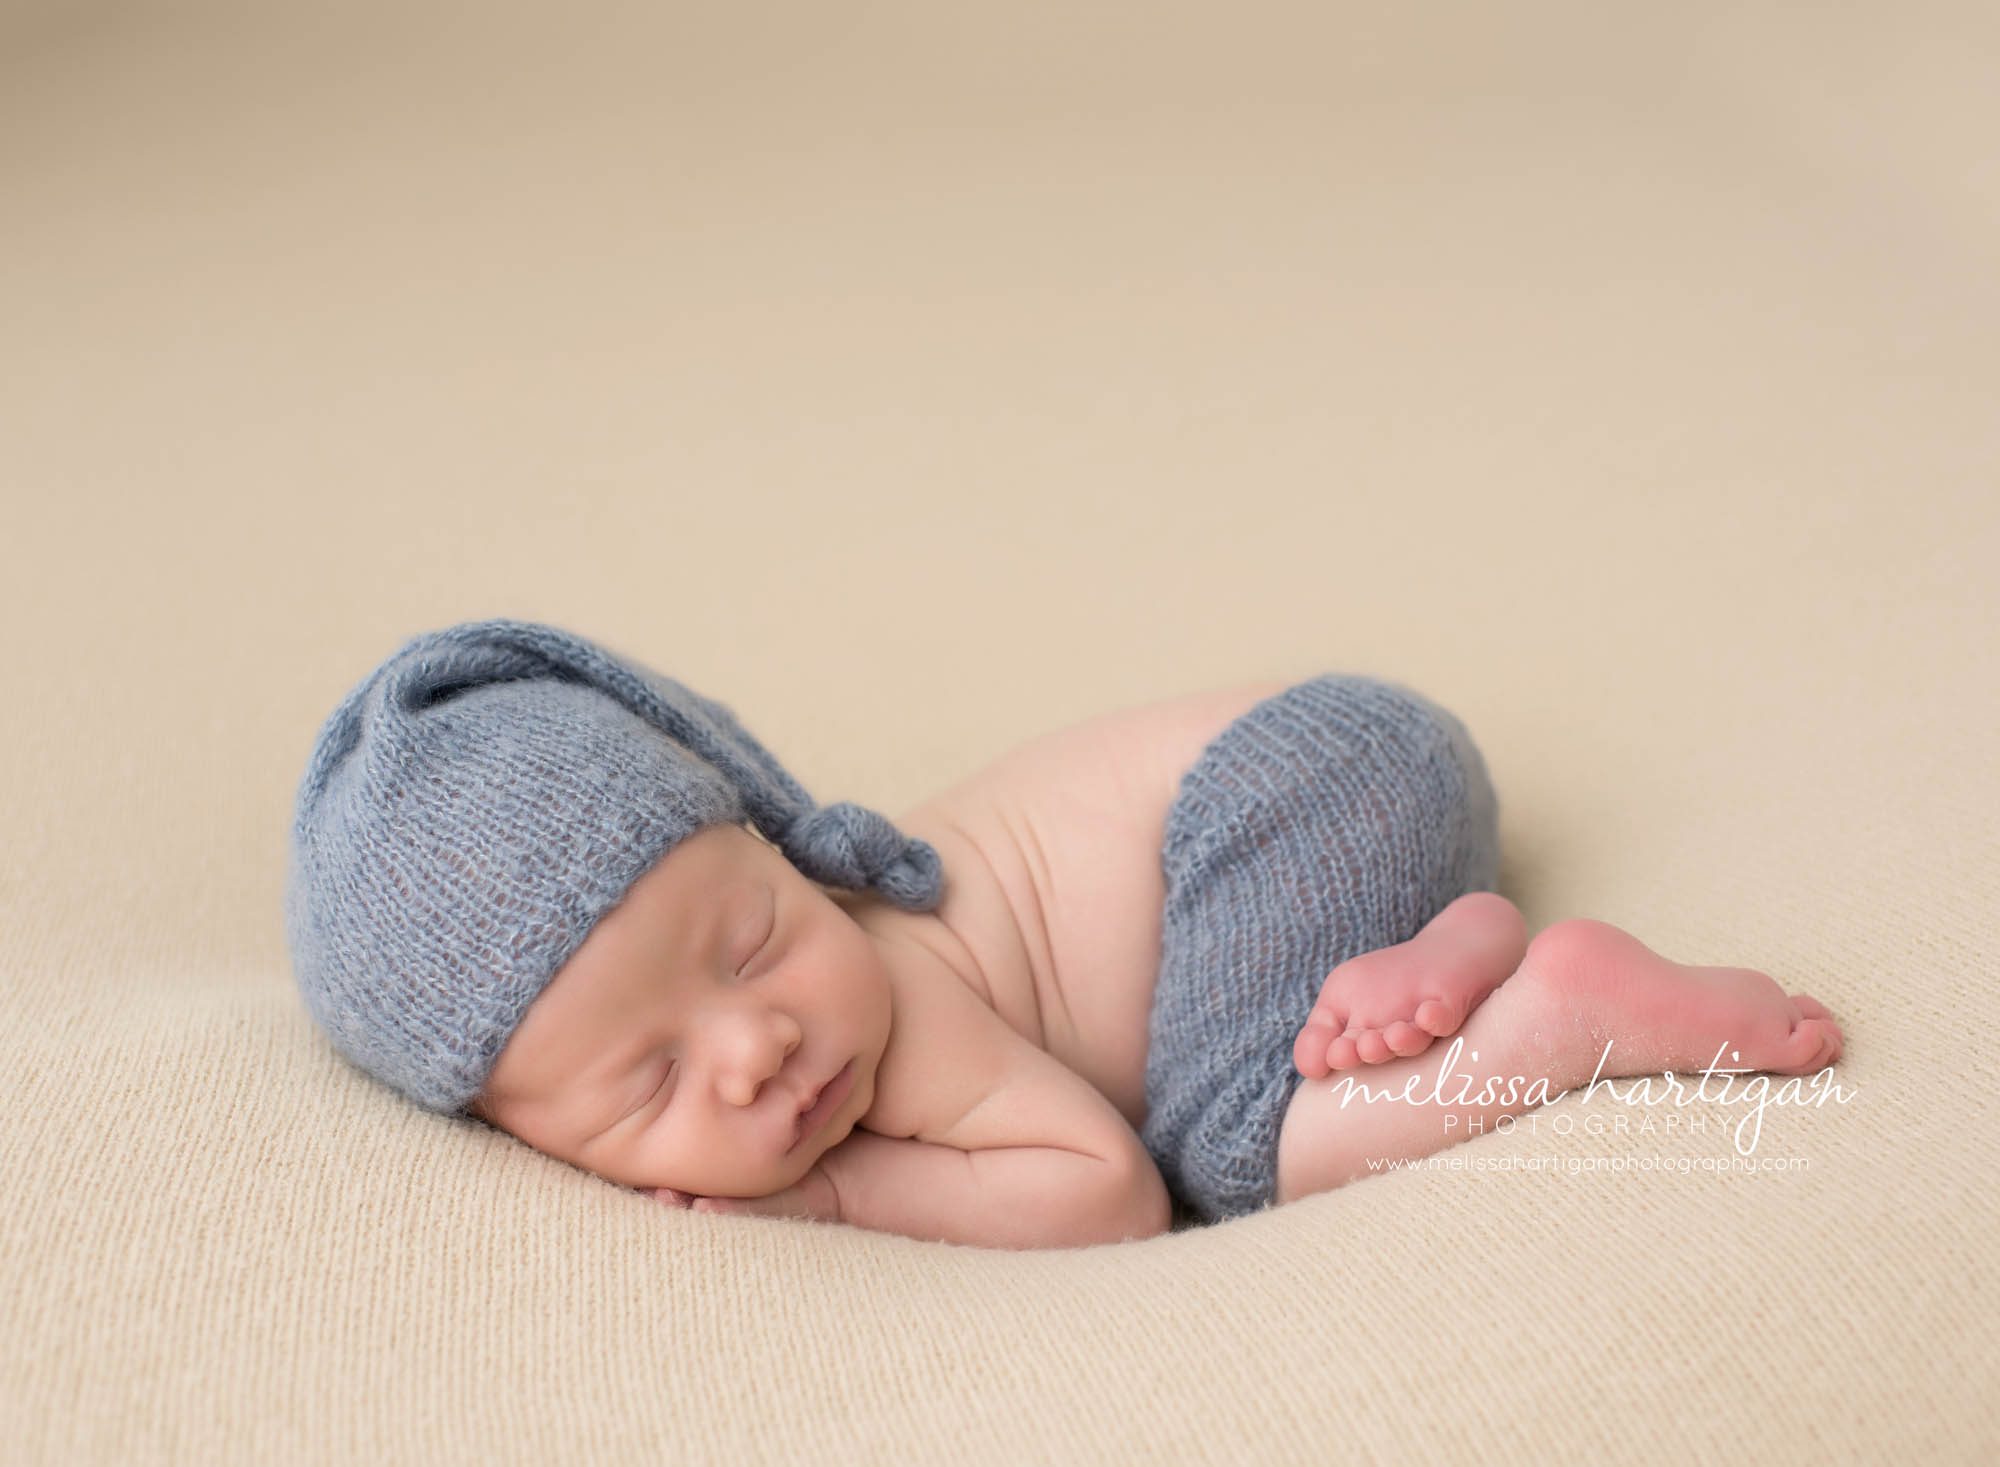 Melissa Hartigan Photography CT Newborn Photographer Taave CT Newborn Session baby boy sleeping wearing blue knit hat and pants